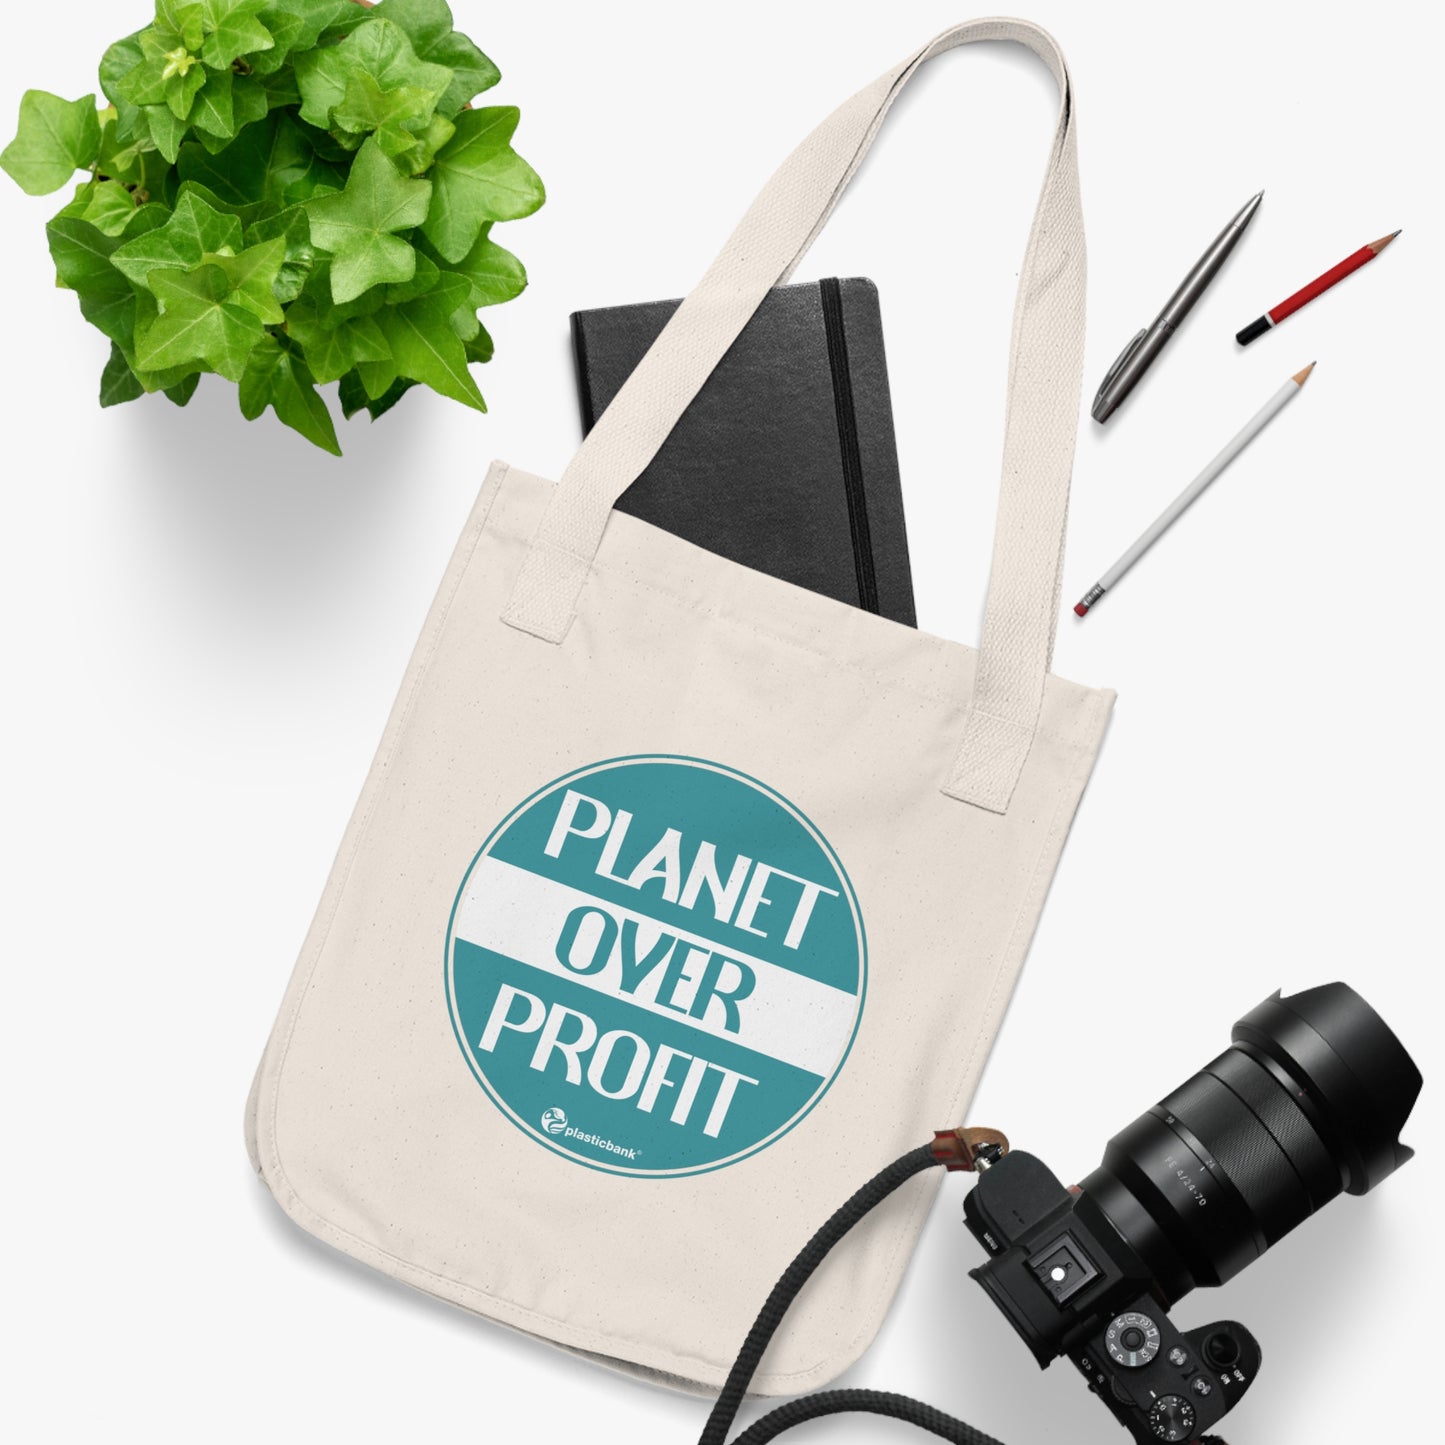 Planet Over Profit Tote Bag